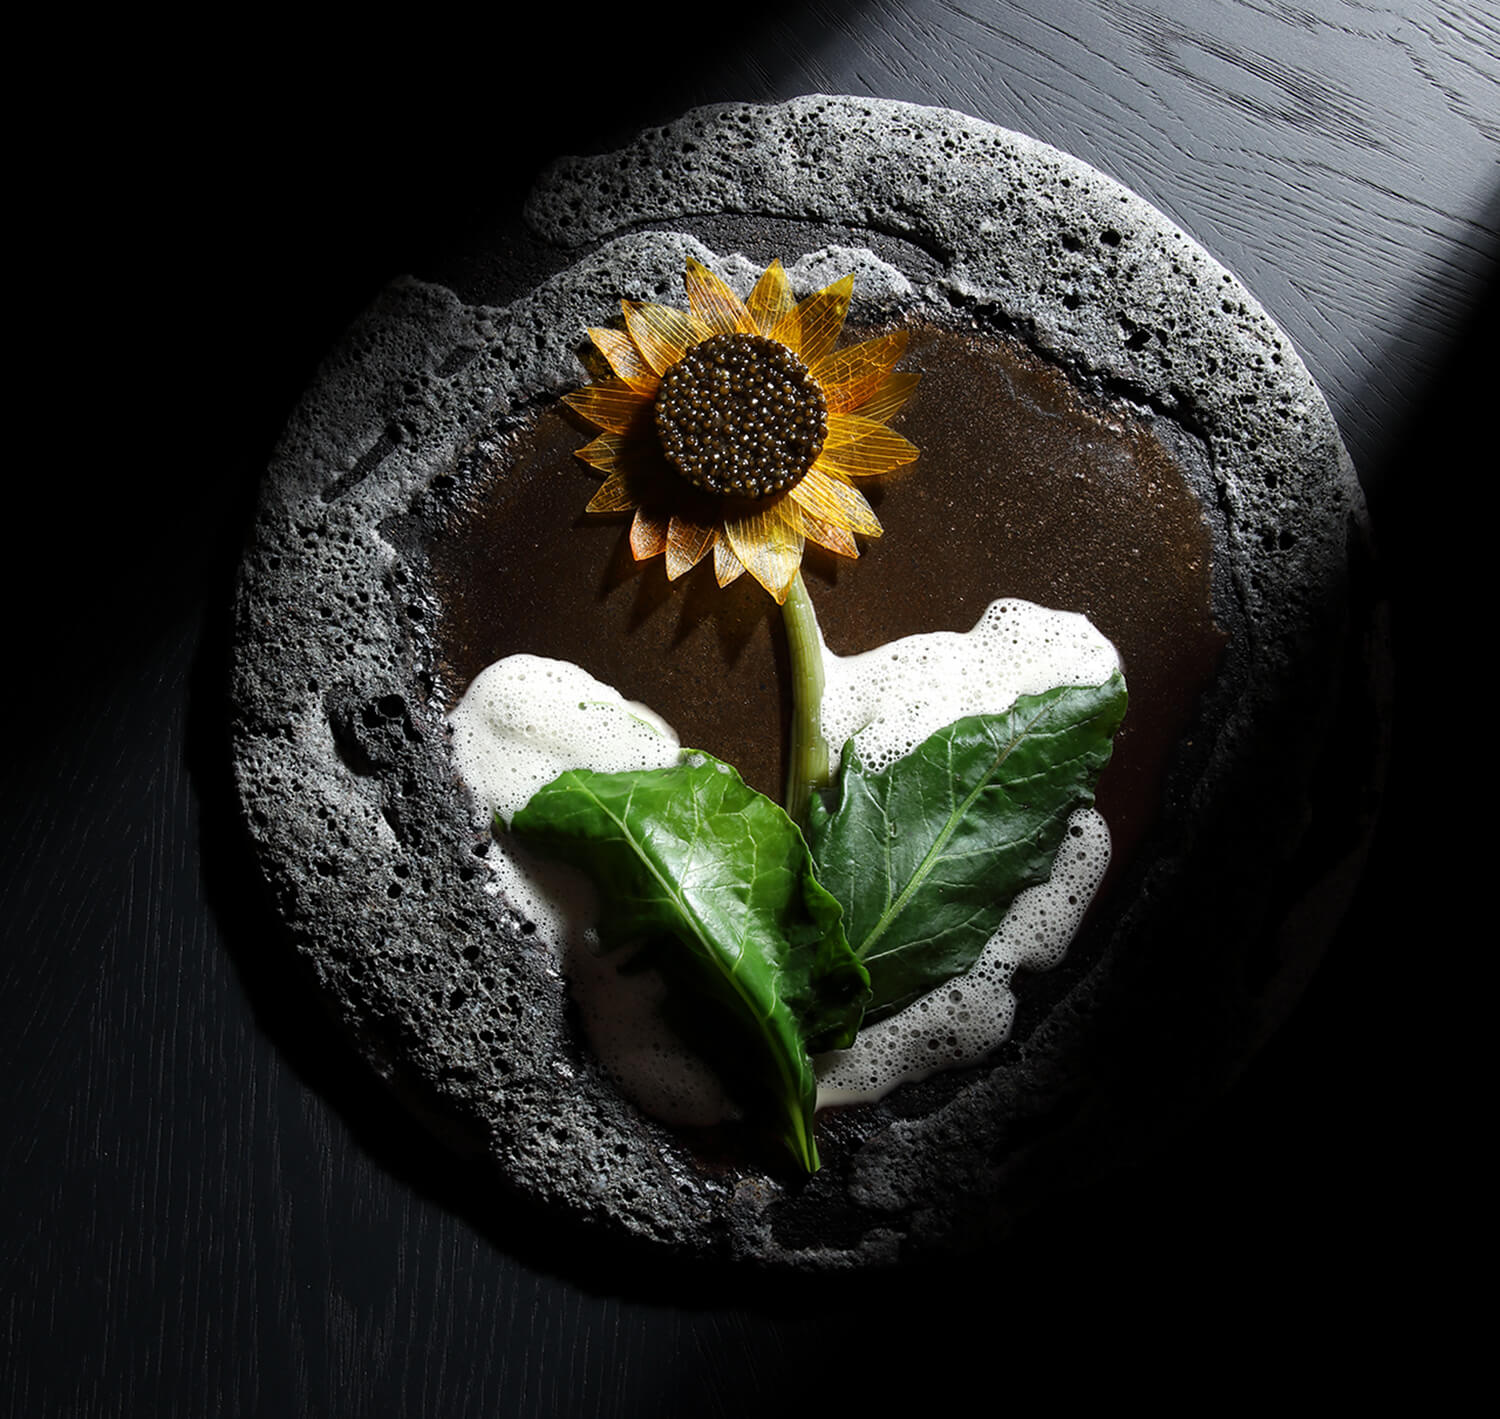 the sunflower-Delta Restaurant, 2 Michelin Stars & 1 Green Star